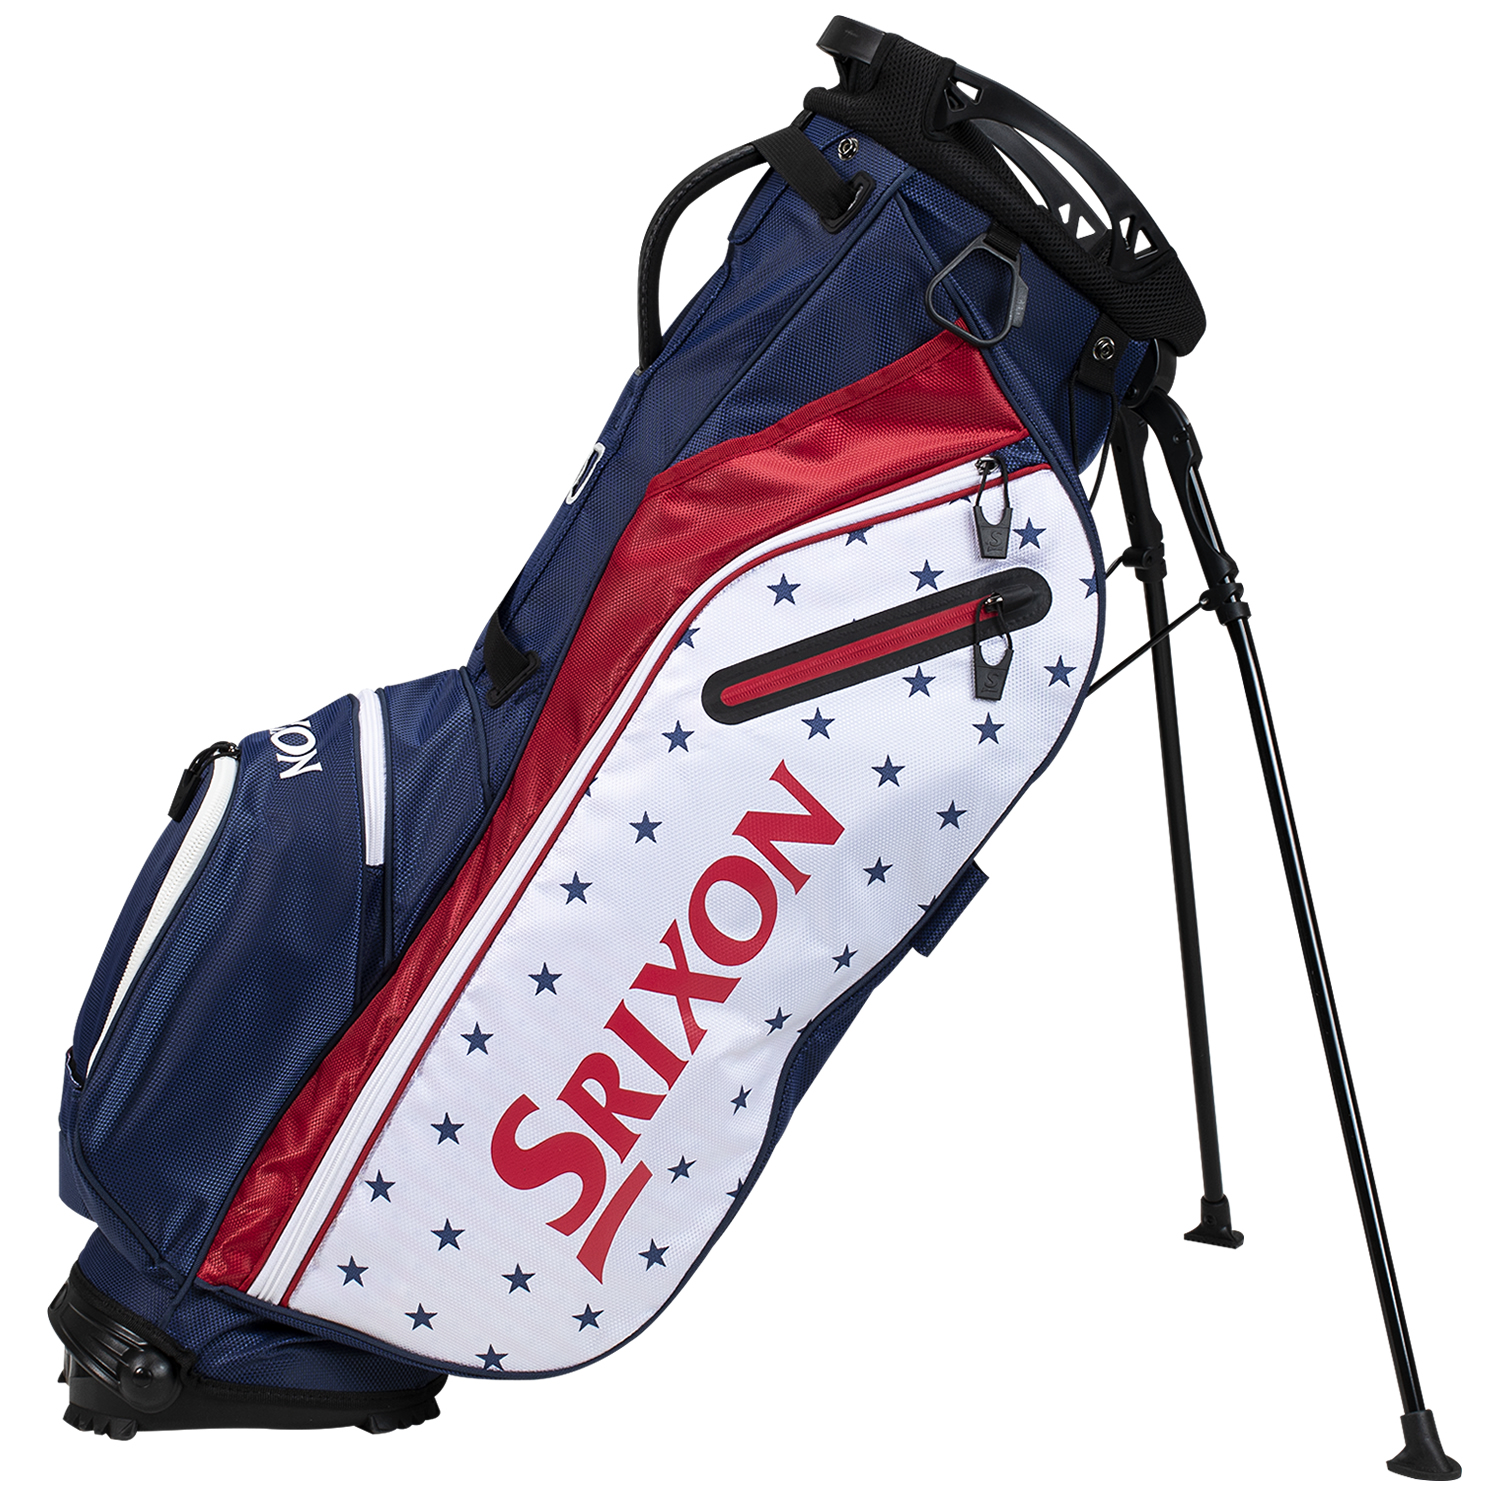 Srixon Special Edition June Major Championship Golf Stand Bag